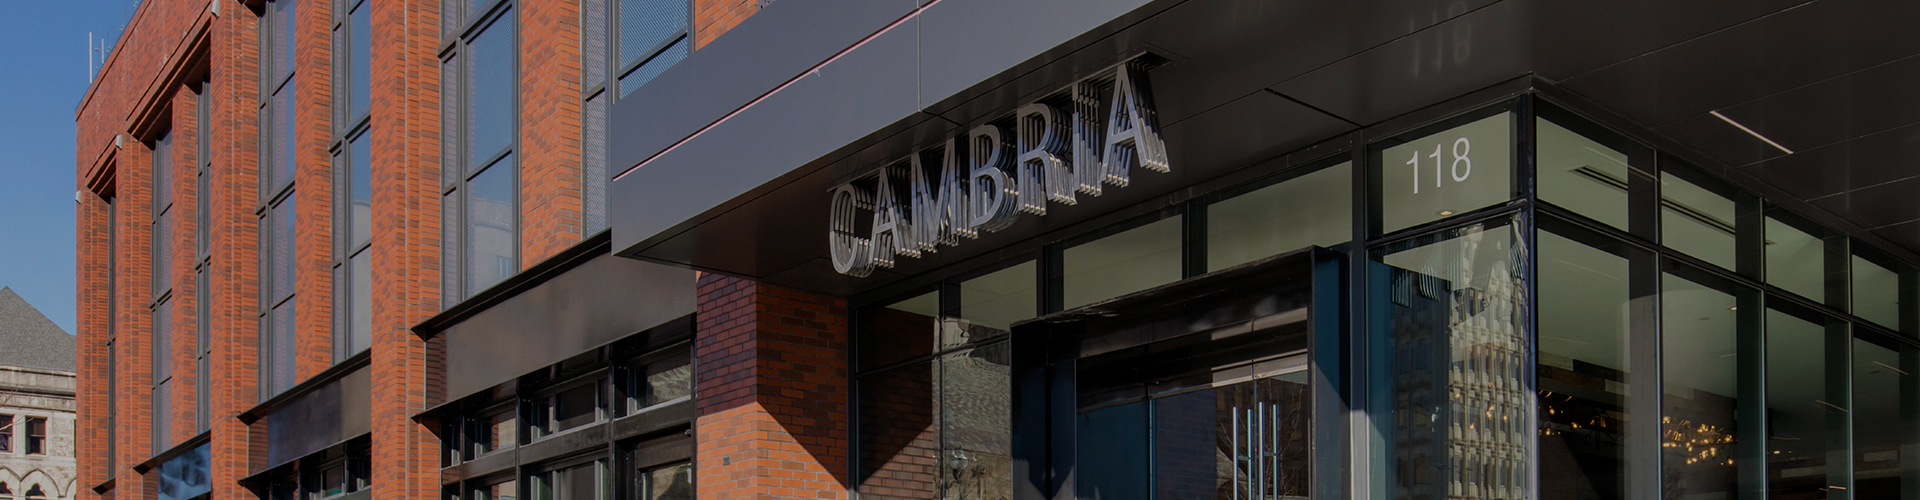 Corner view of facade of Cambria property 